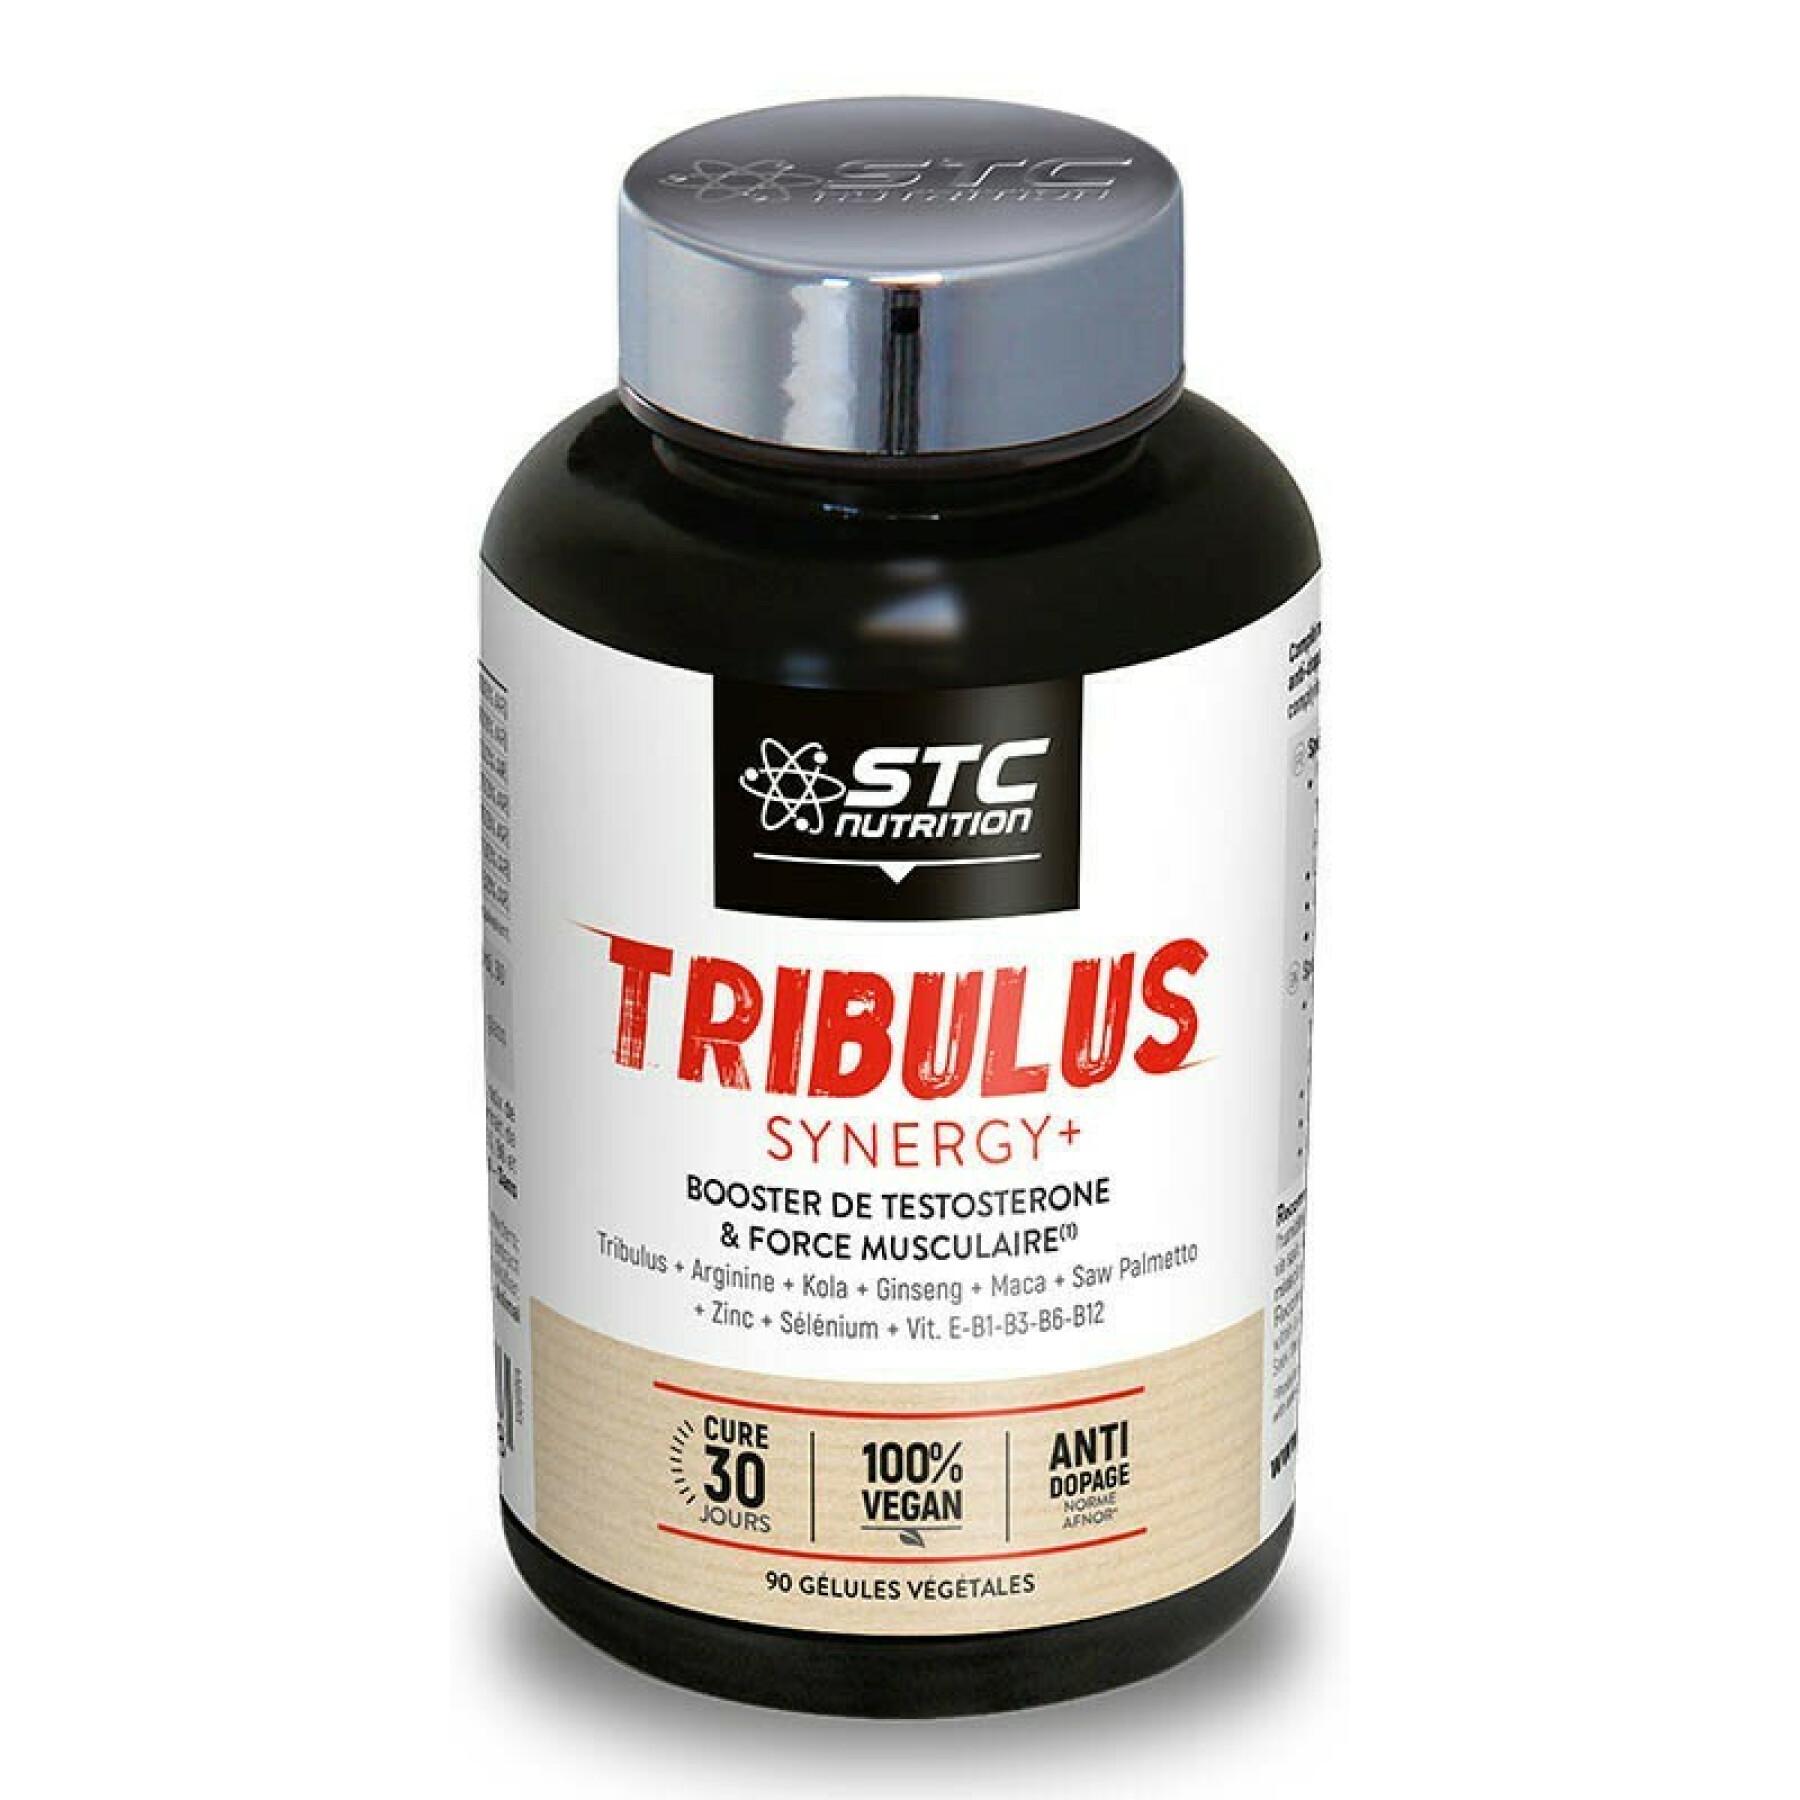 Tribulus synergy+ potenciador de testosterona y fuerza muscular STC Nutrition - 90 gélules végétales